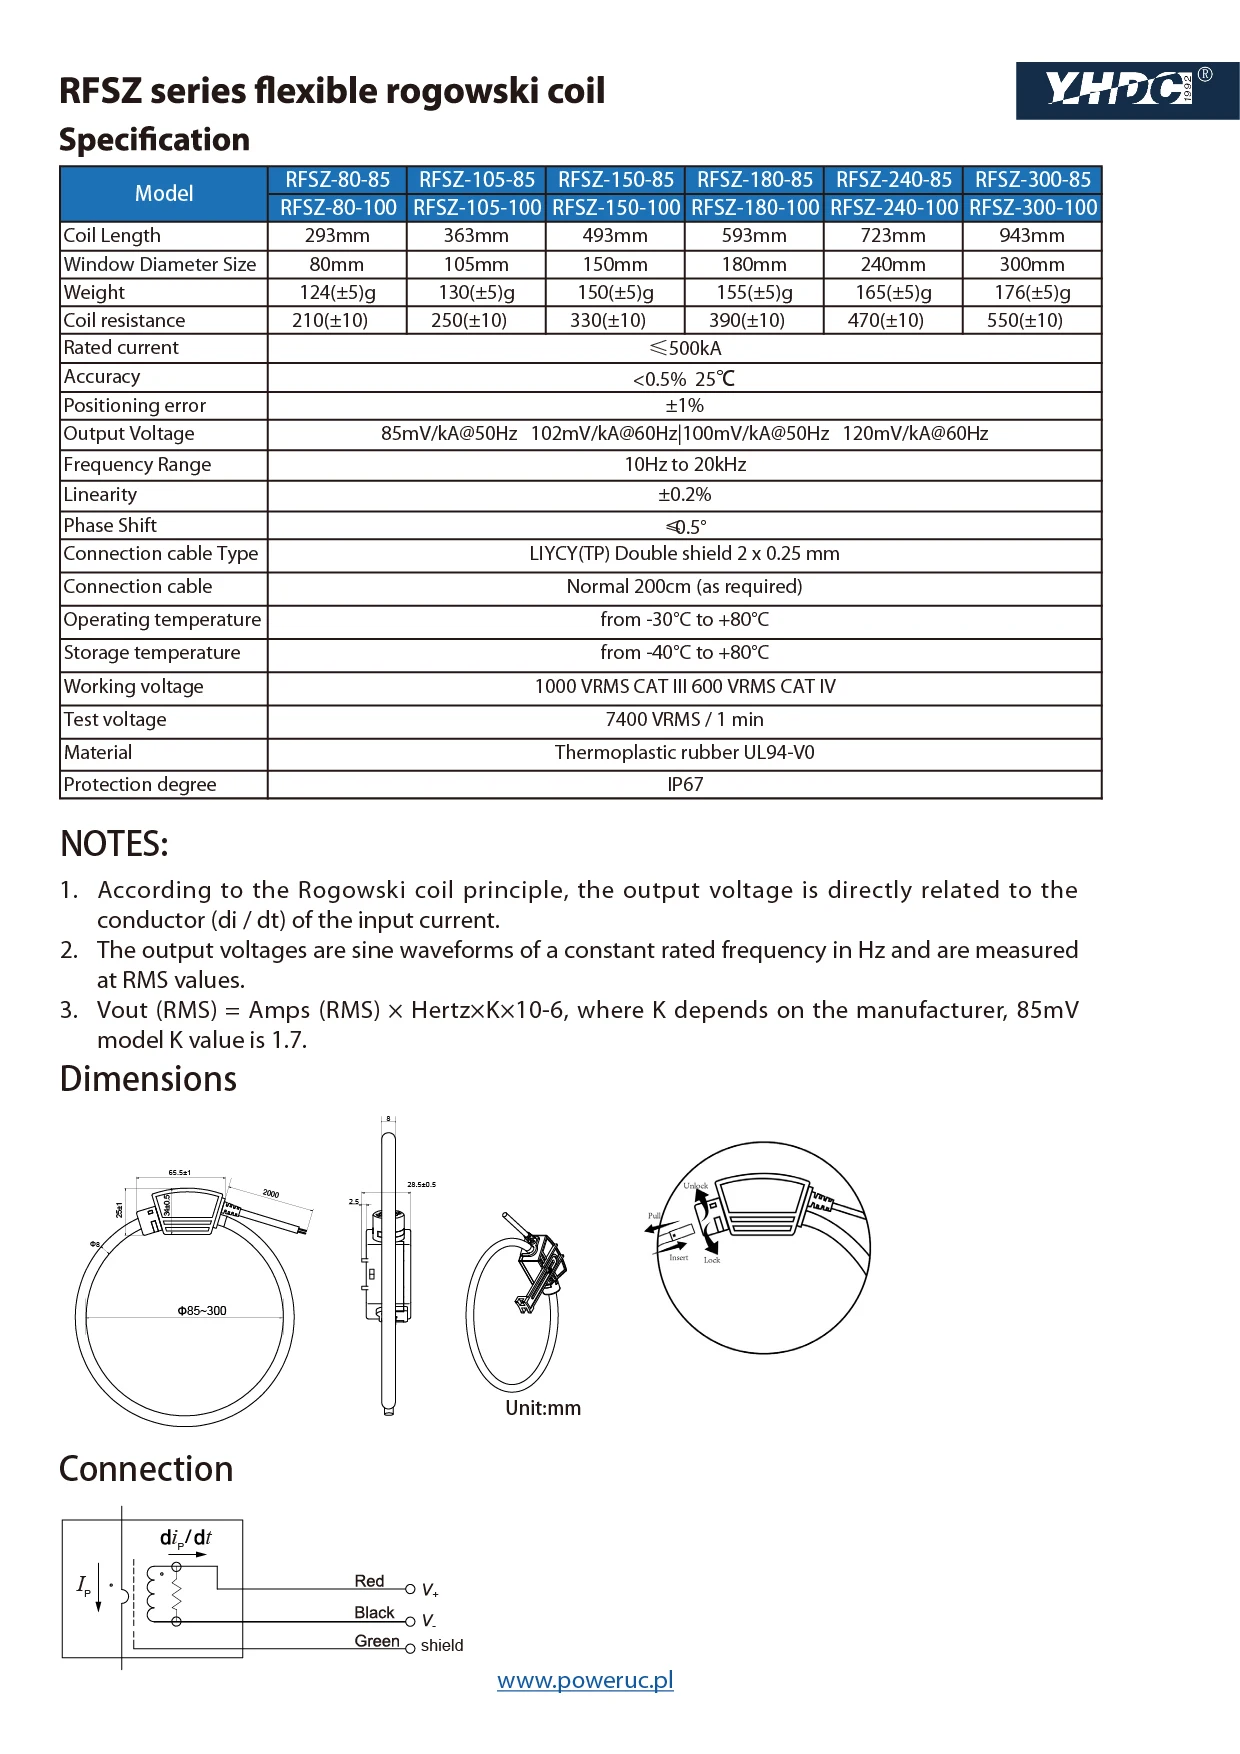 Rogowski coil RFSZ Rated current 30A-500KA output voltage 85mV/kA@50Hz –  PowerUC